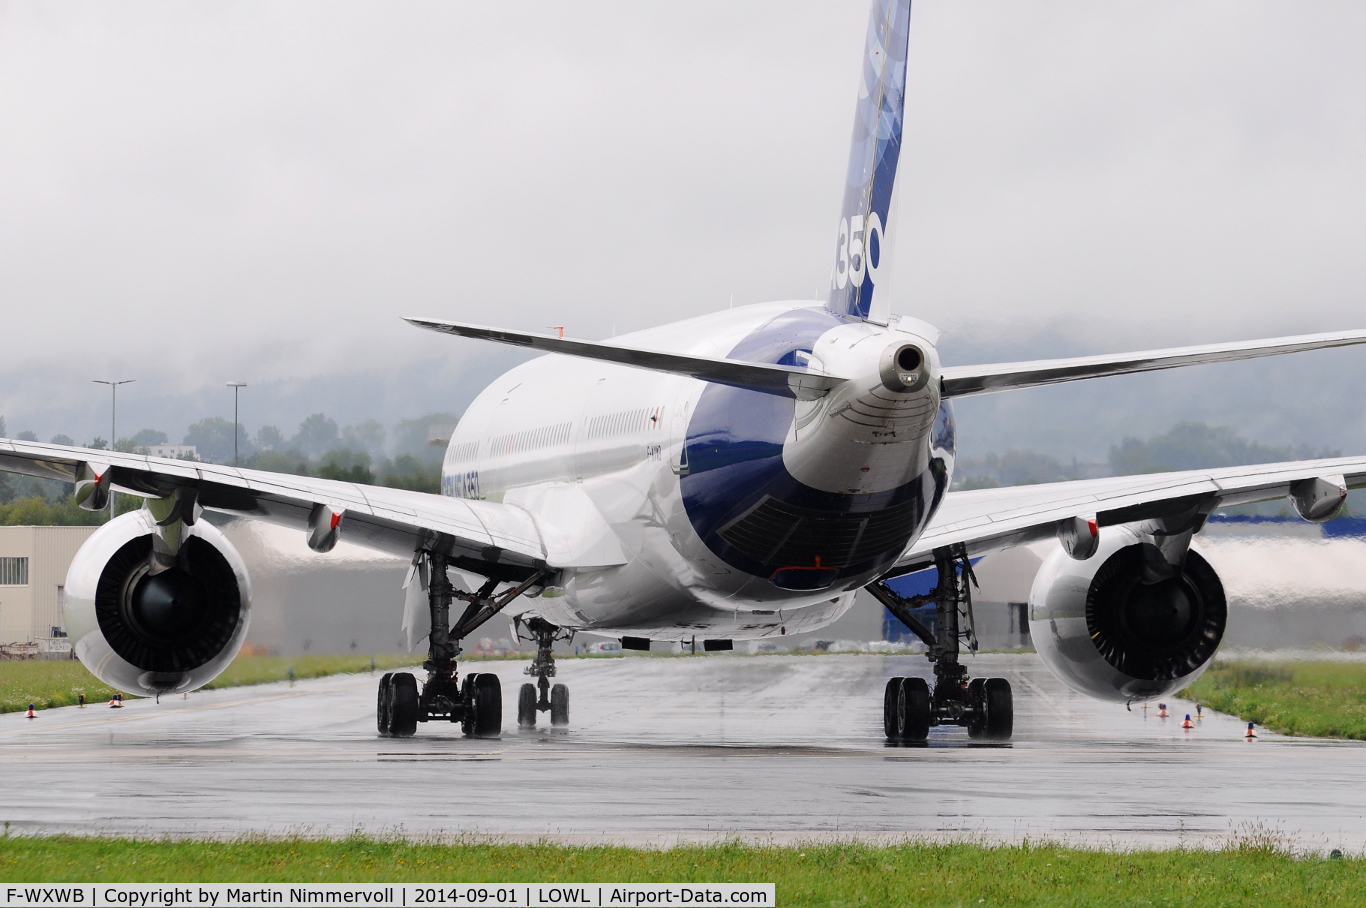 F-WXWB, 2013 Airbus A350-941 C/N 001, Airbus Industrie